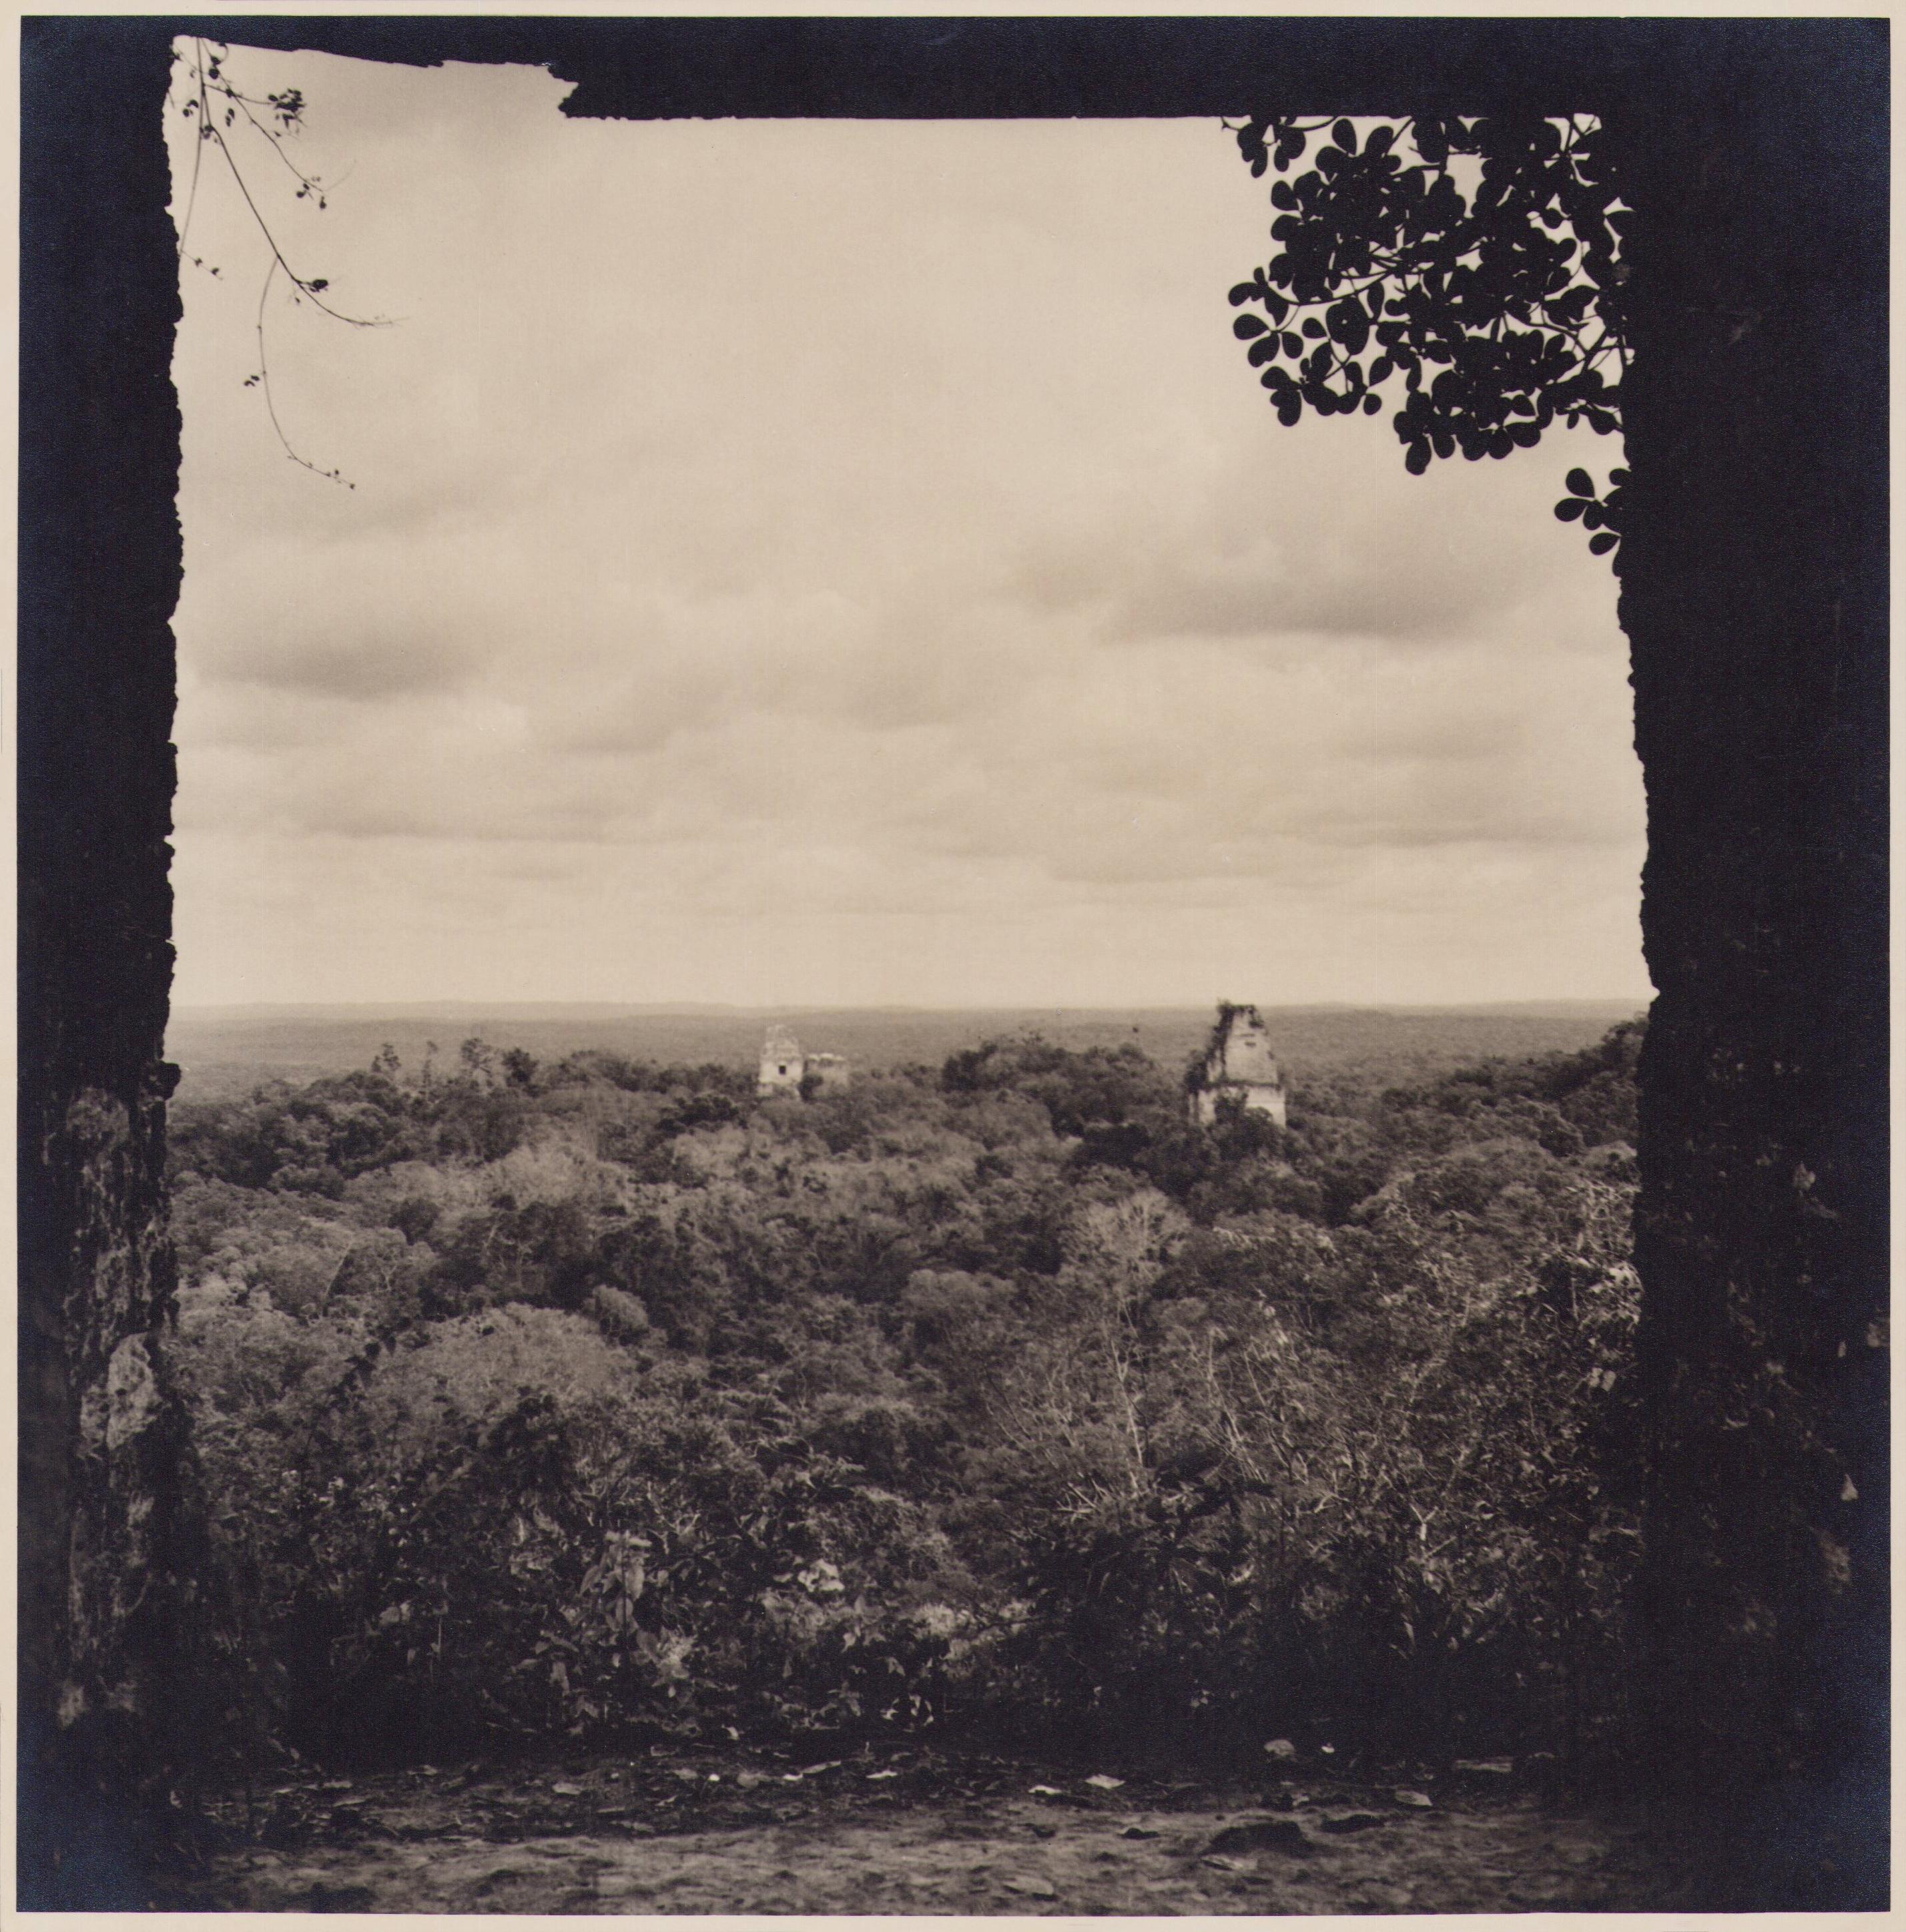 Guatemala, Landscape, Black and White Photography, ca. 1960s, 24, 4 x 24 cm